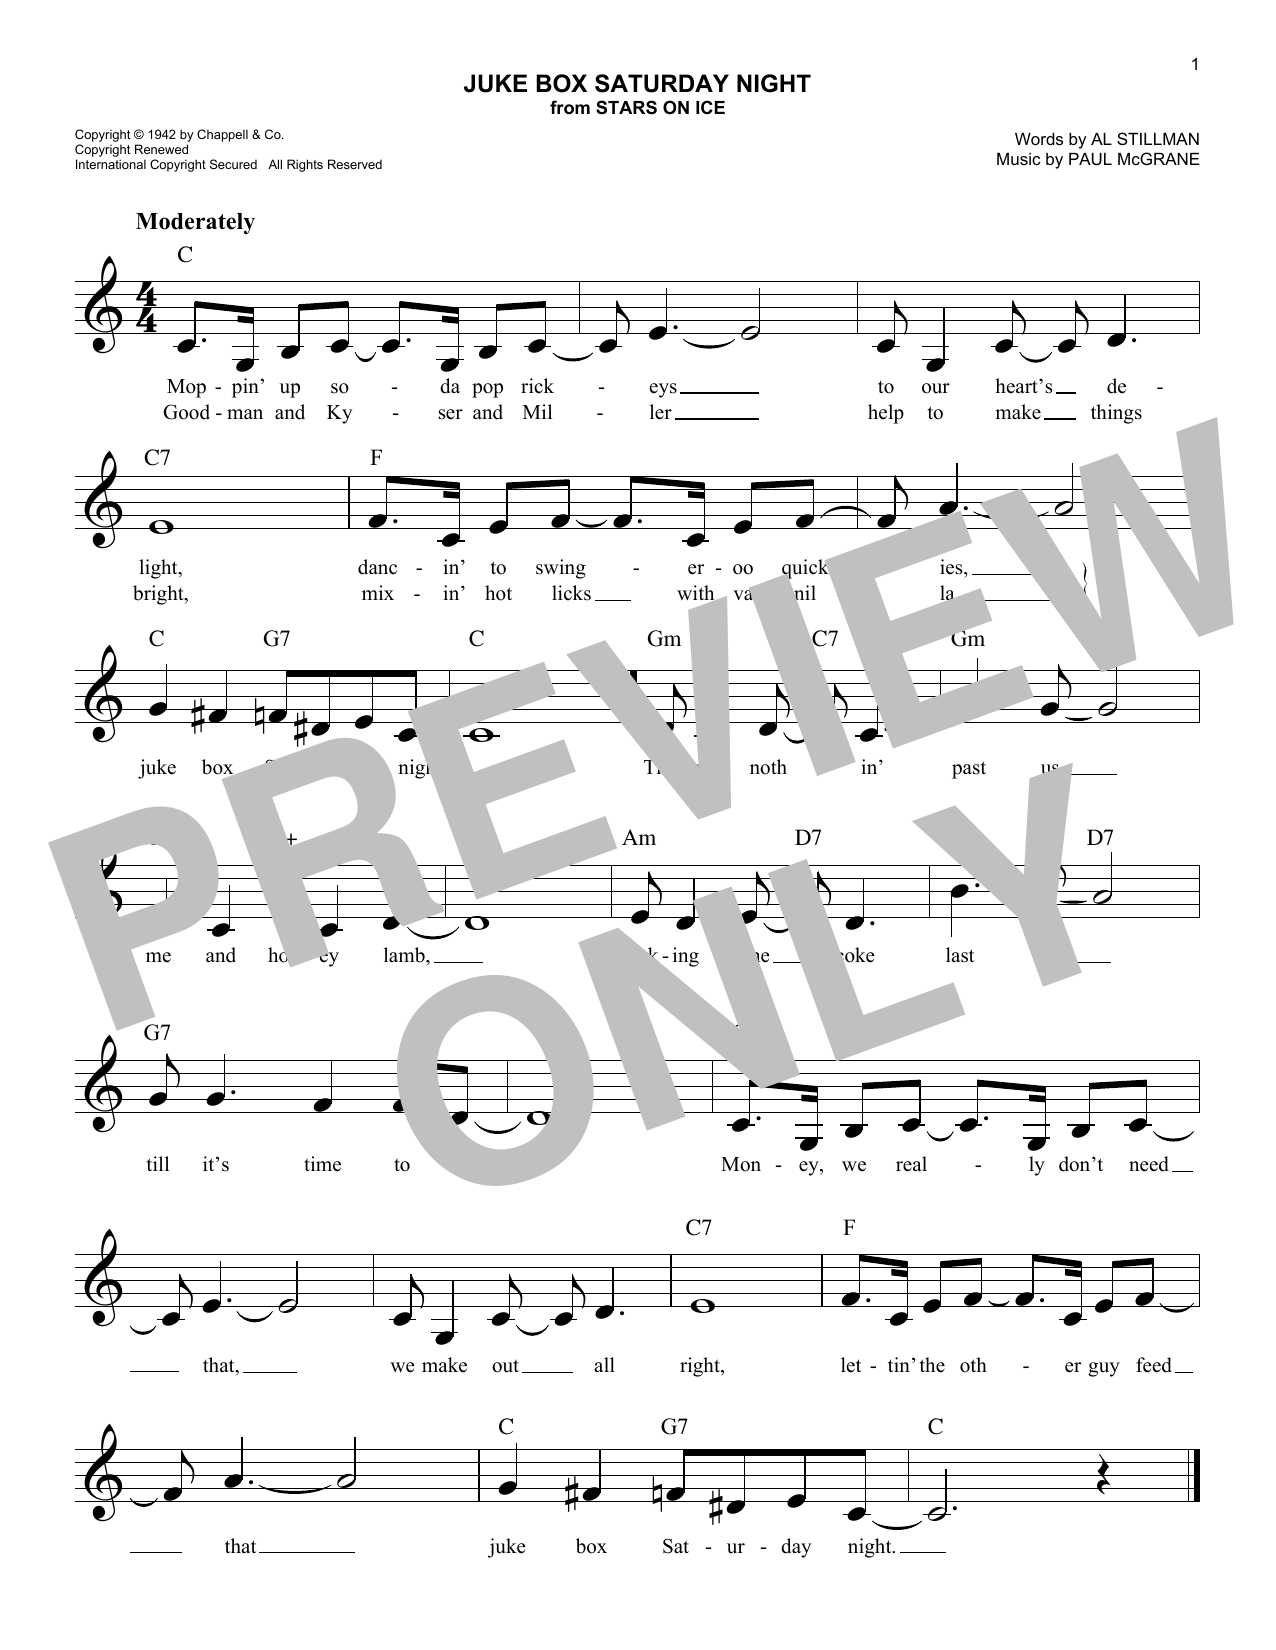 Al Stillman Juke Box Saturday Night Sheet Music Notes & Chords for Melody Line, Lyrics & Chords - Download or Print PDF